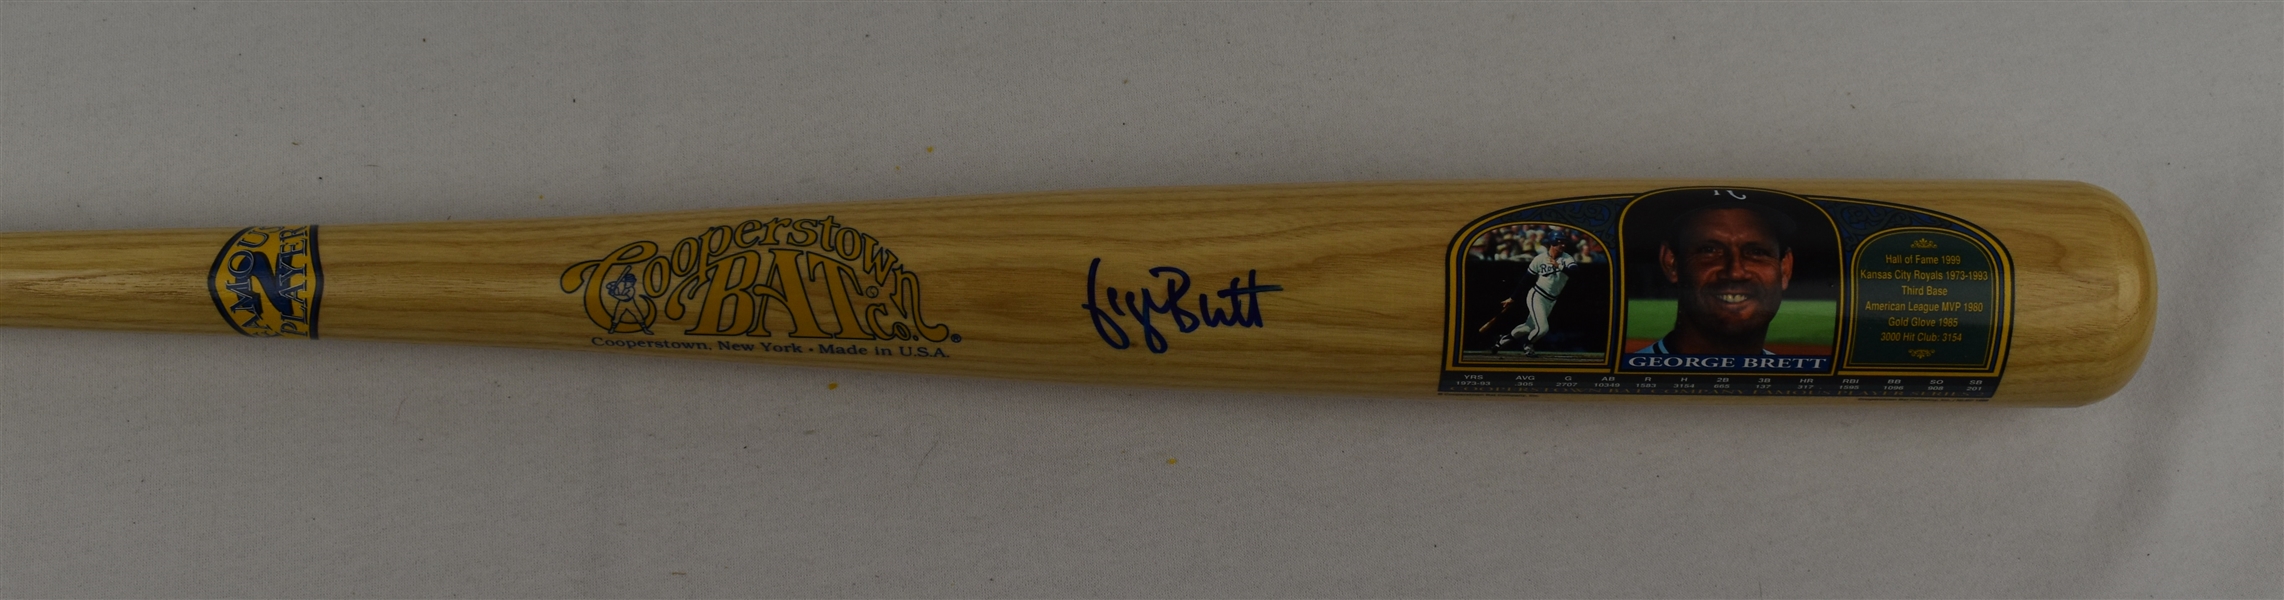 George Brett Autographed Bat